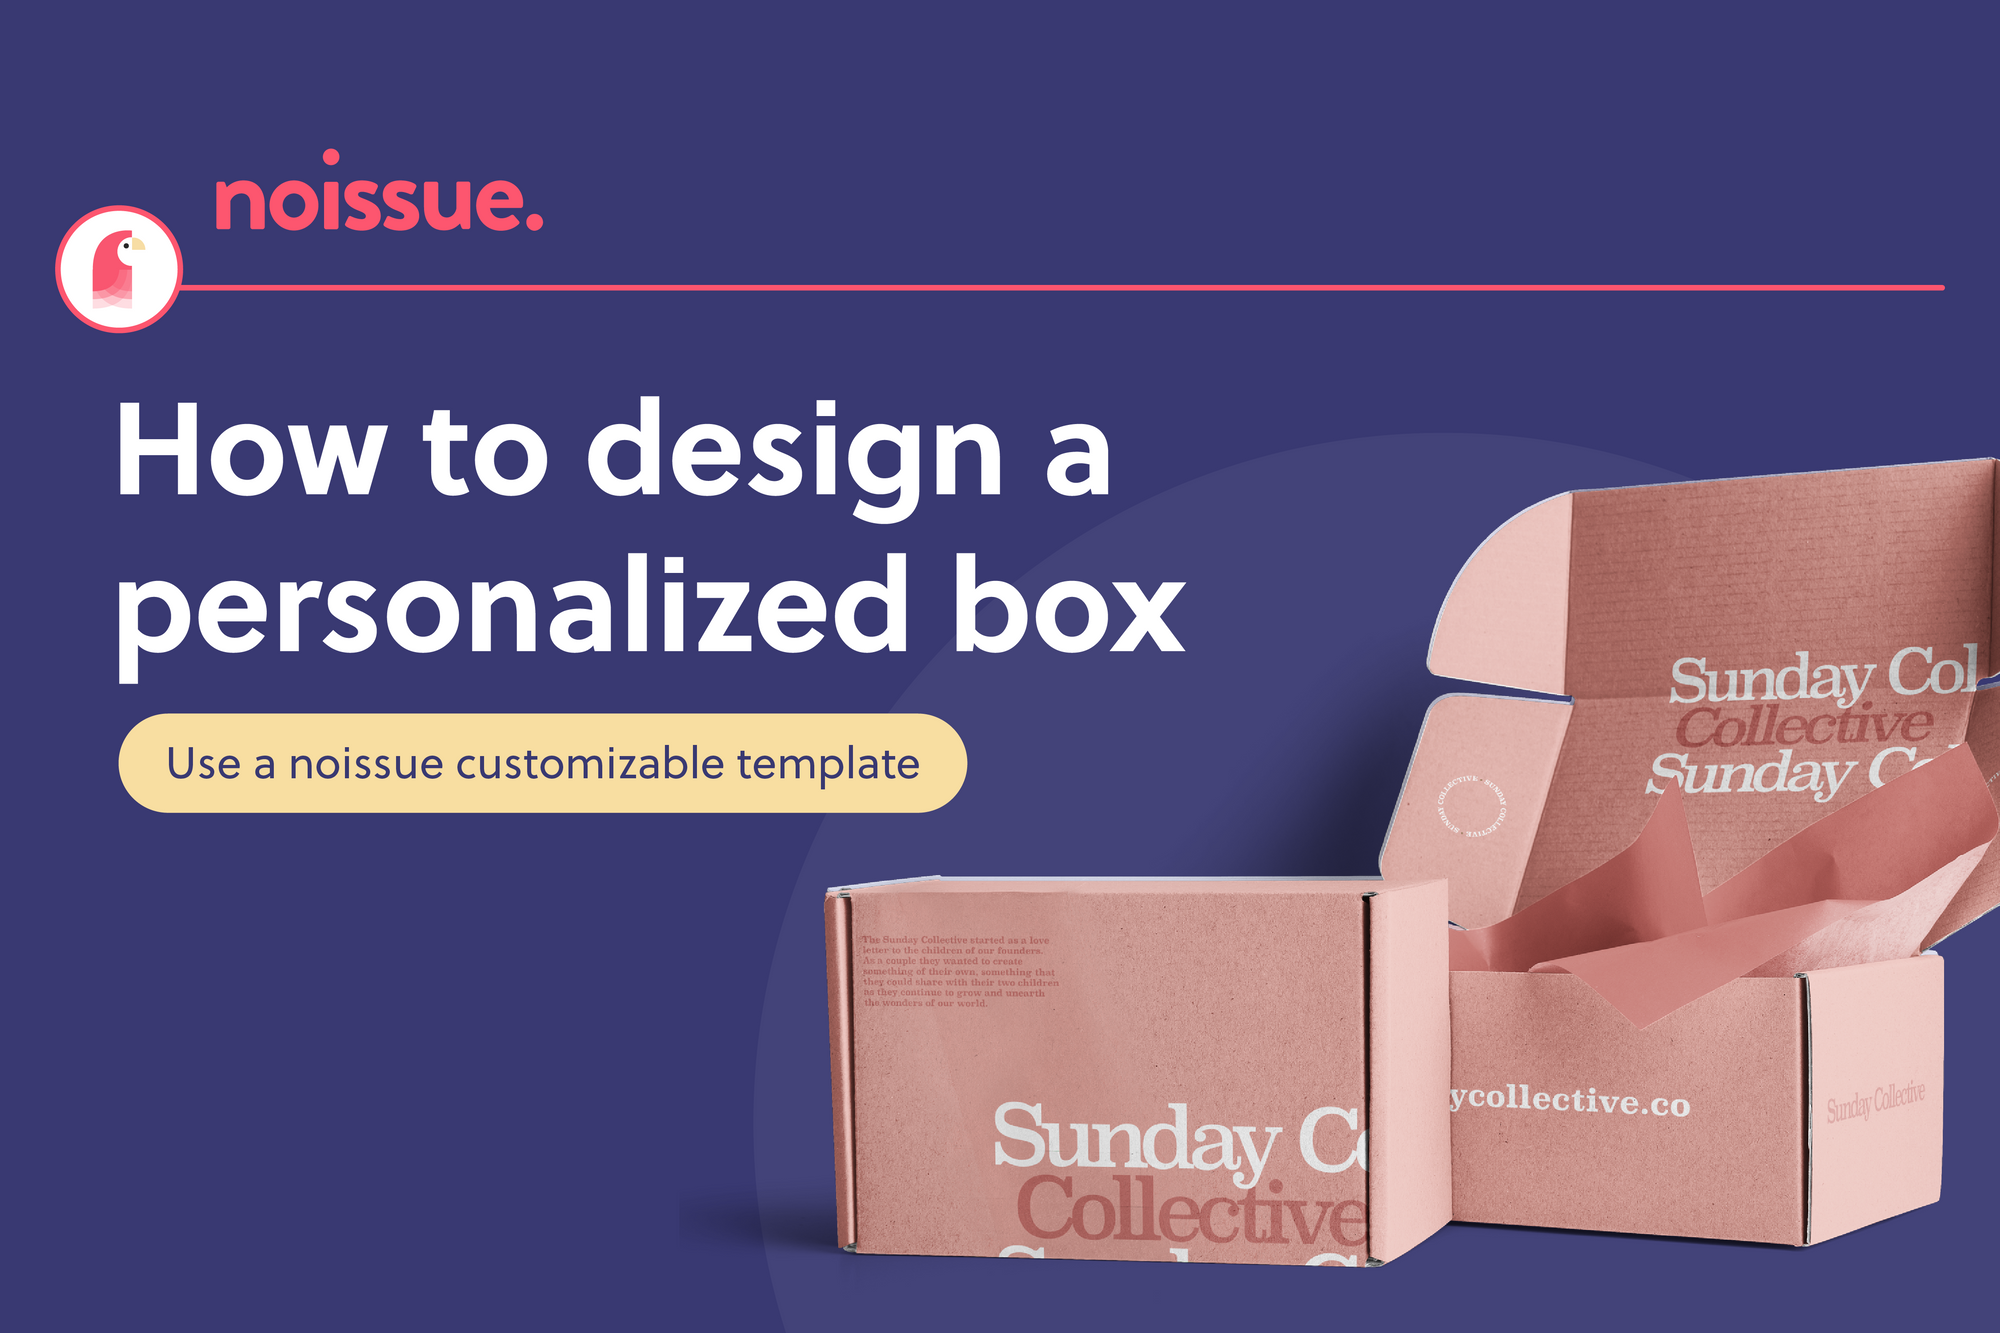 noissue custom boxes 